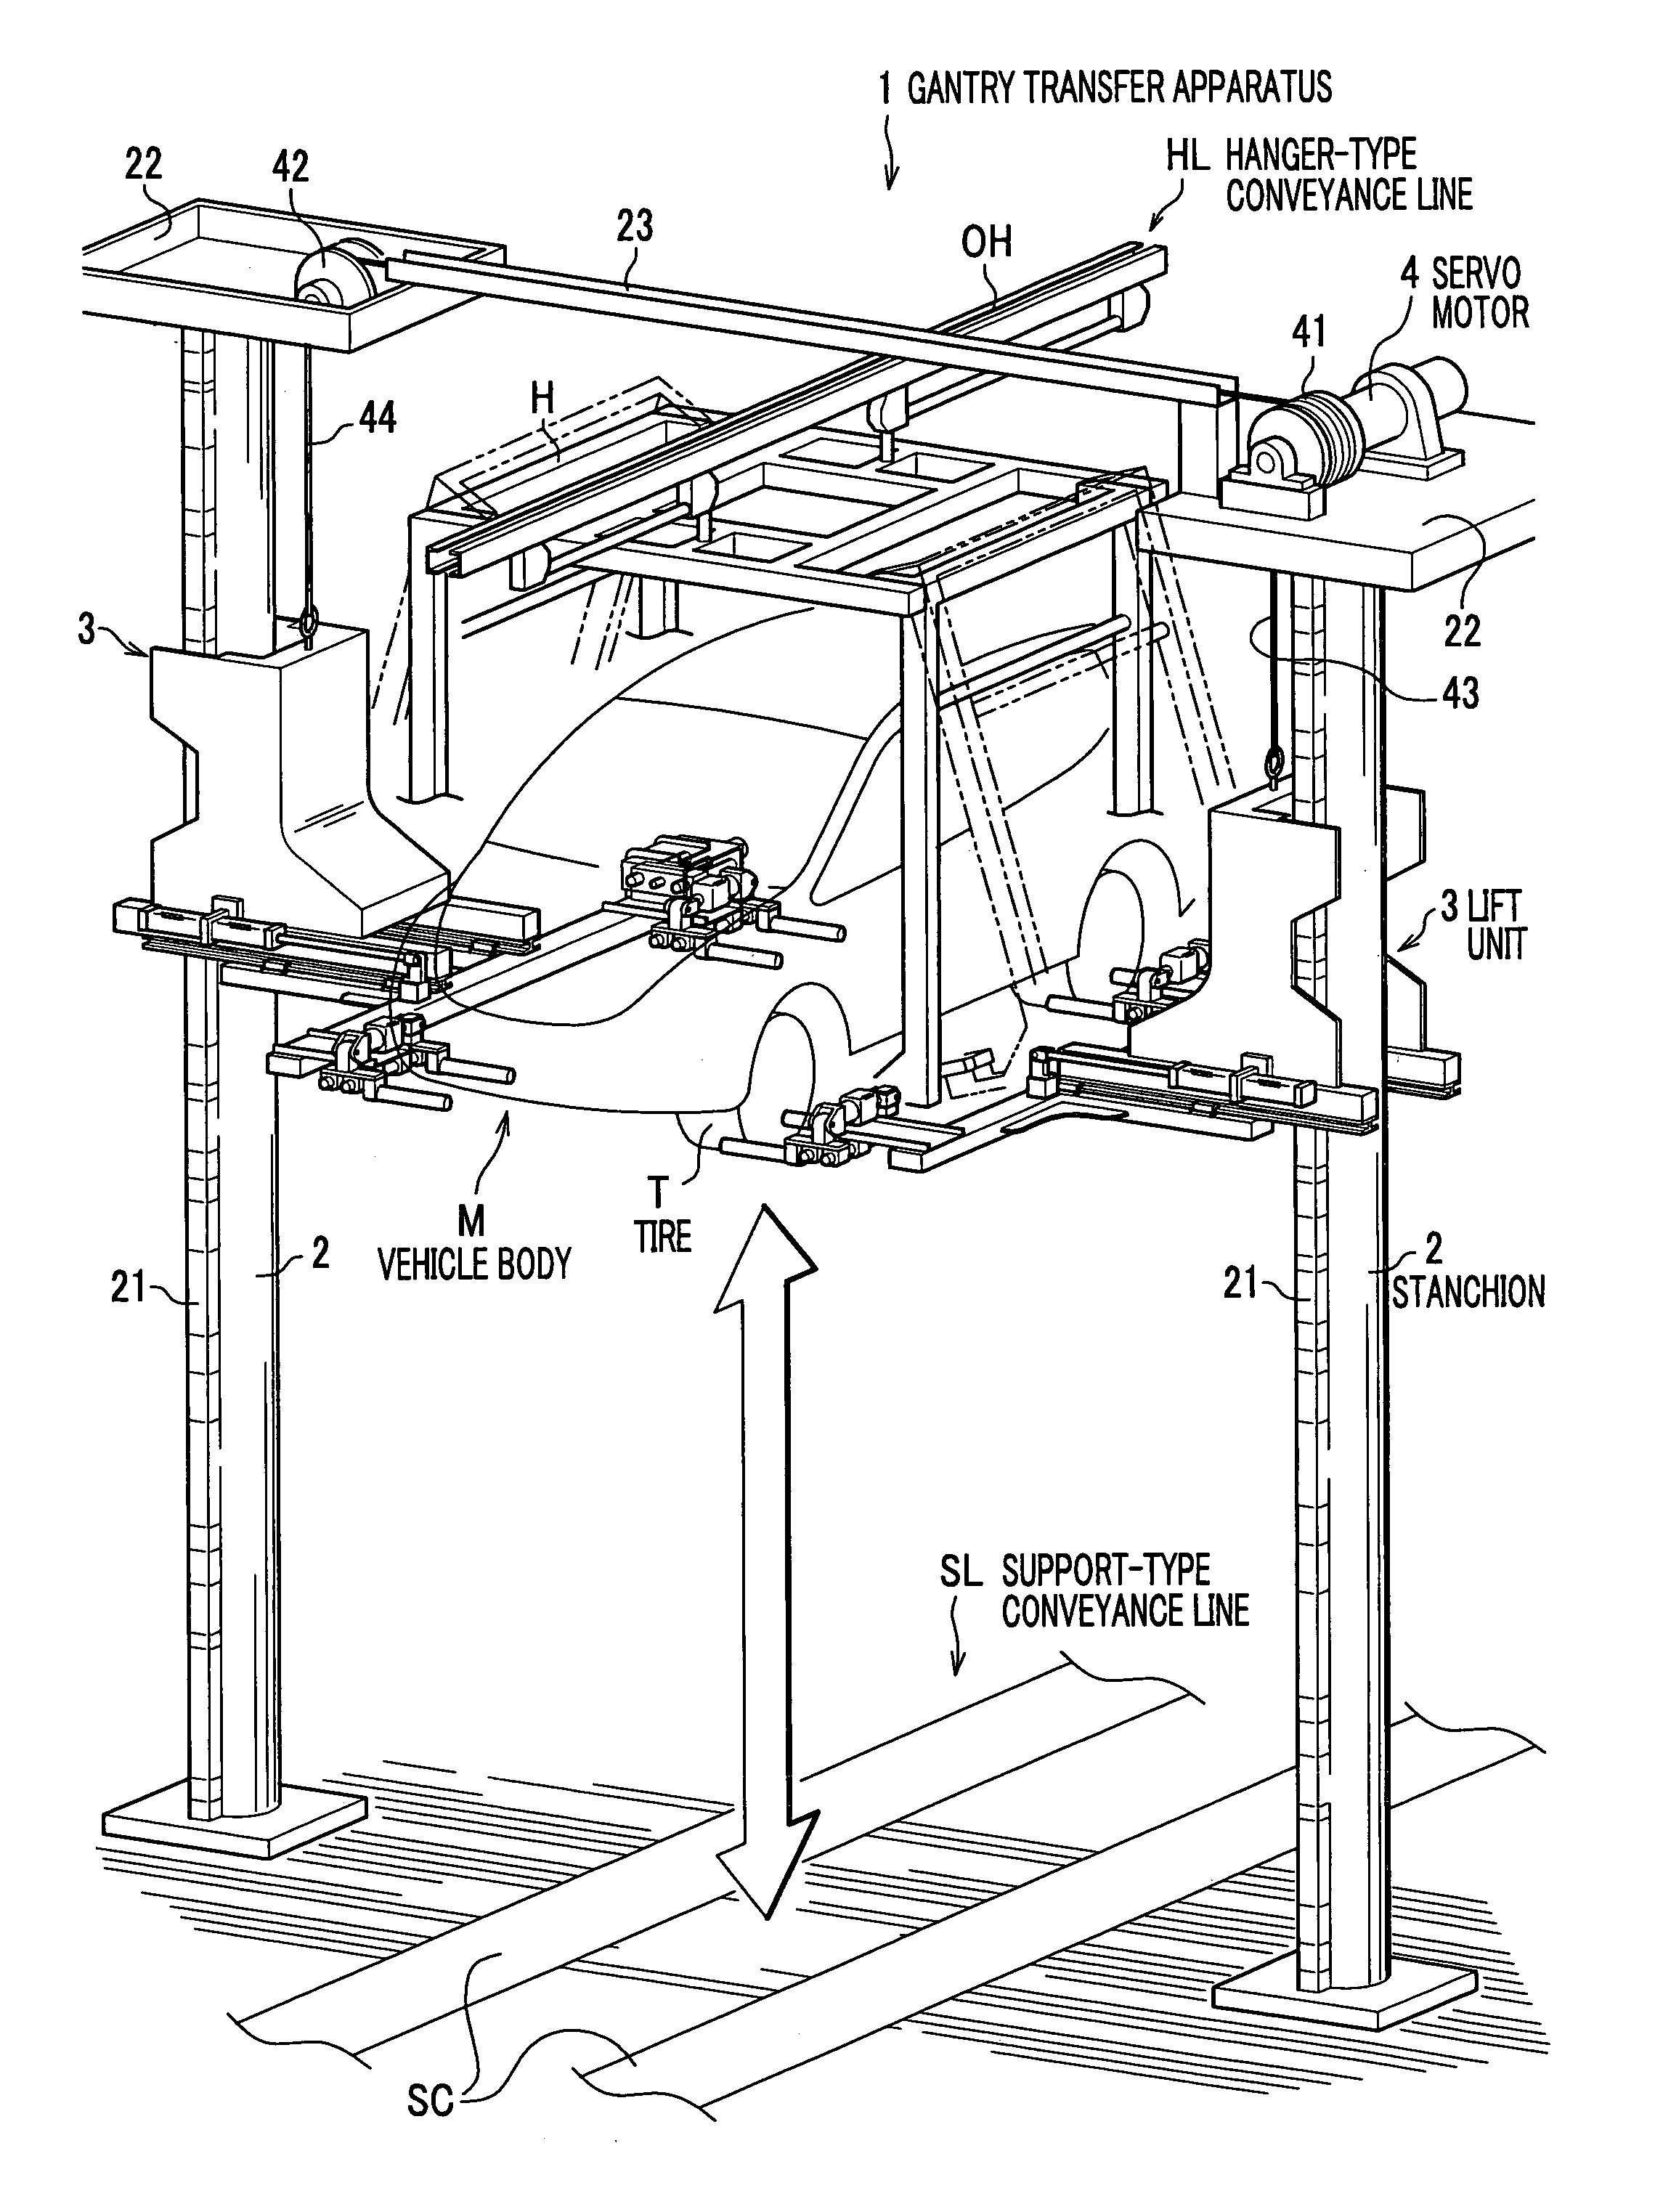 Vehicle body transfer apparatus